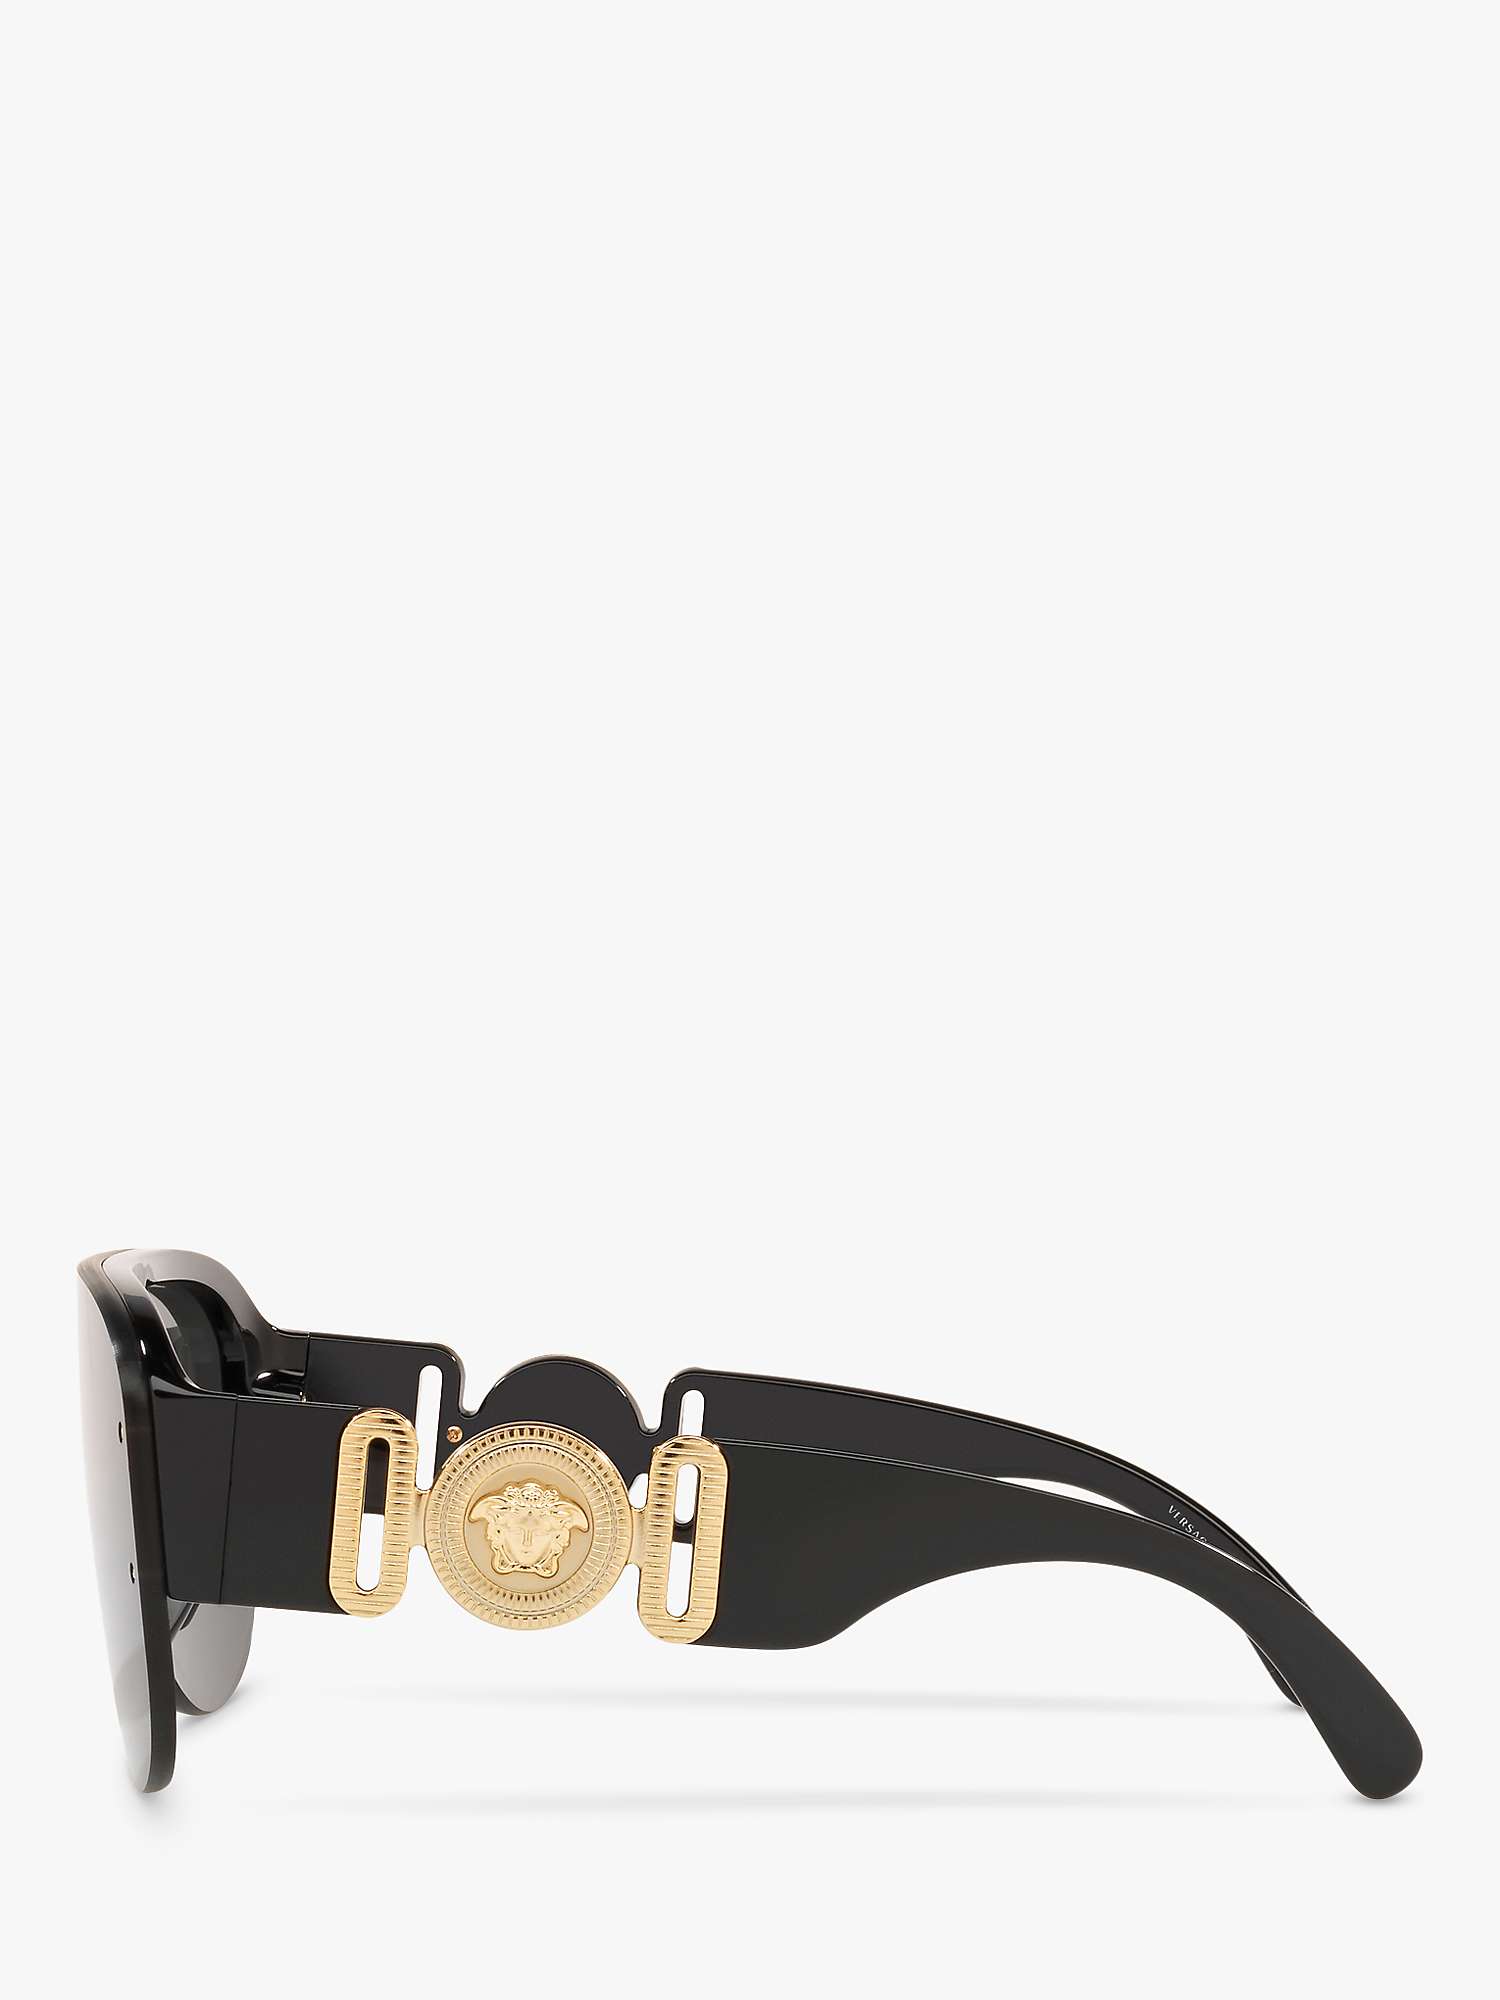 Buy Versace VE4391 Women's Irregular Sunglasses, Black/Grey Online at johnlewis.com